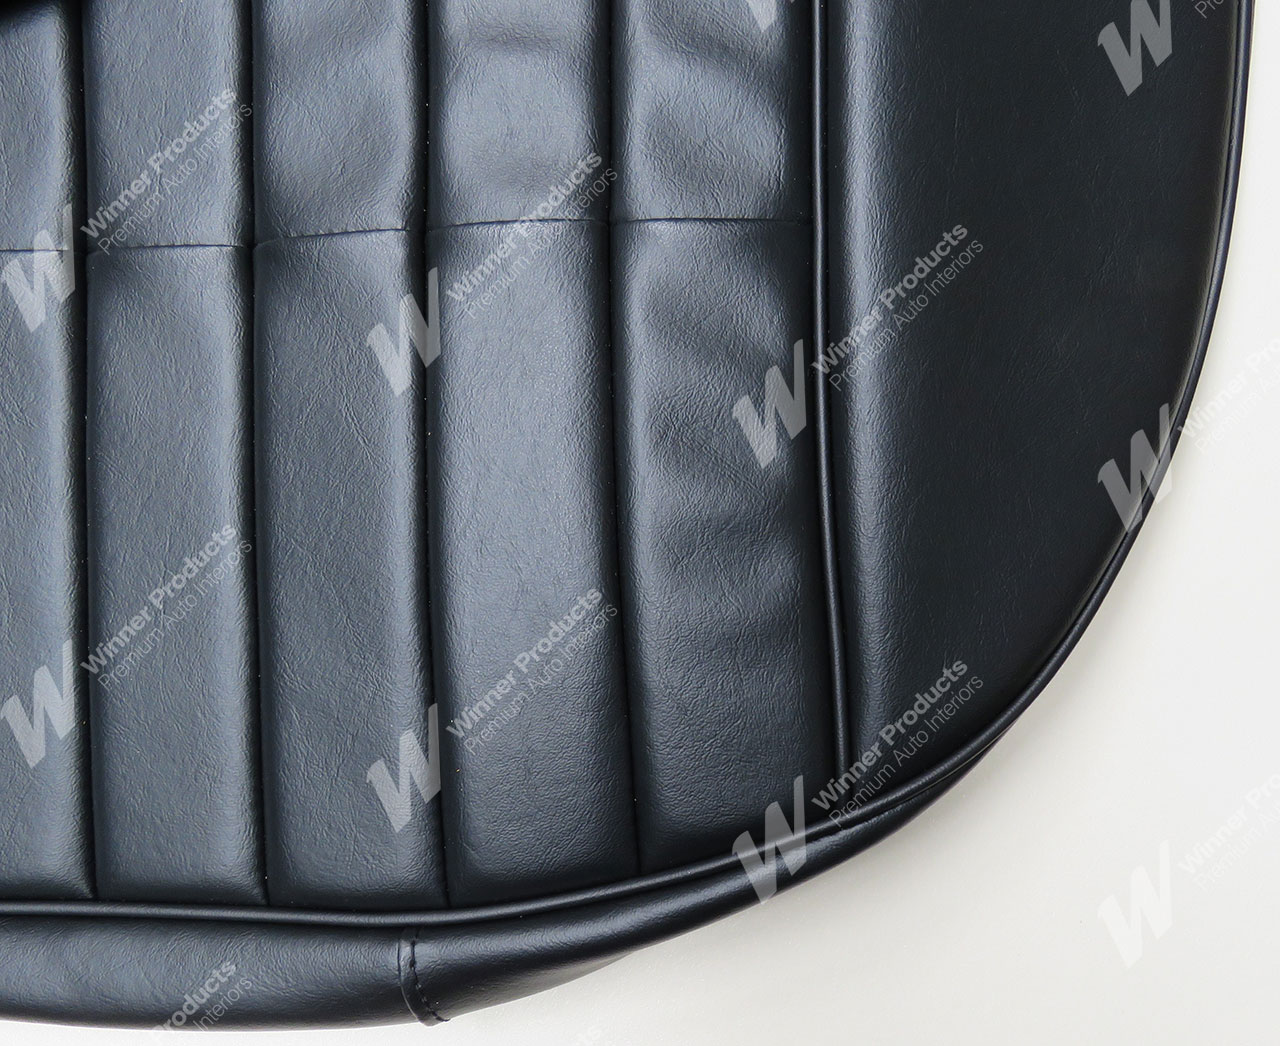 Holden Premier HK Premier Wagon 10R Black Seat Covers (Image 7 of 7)